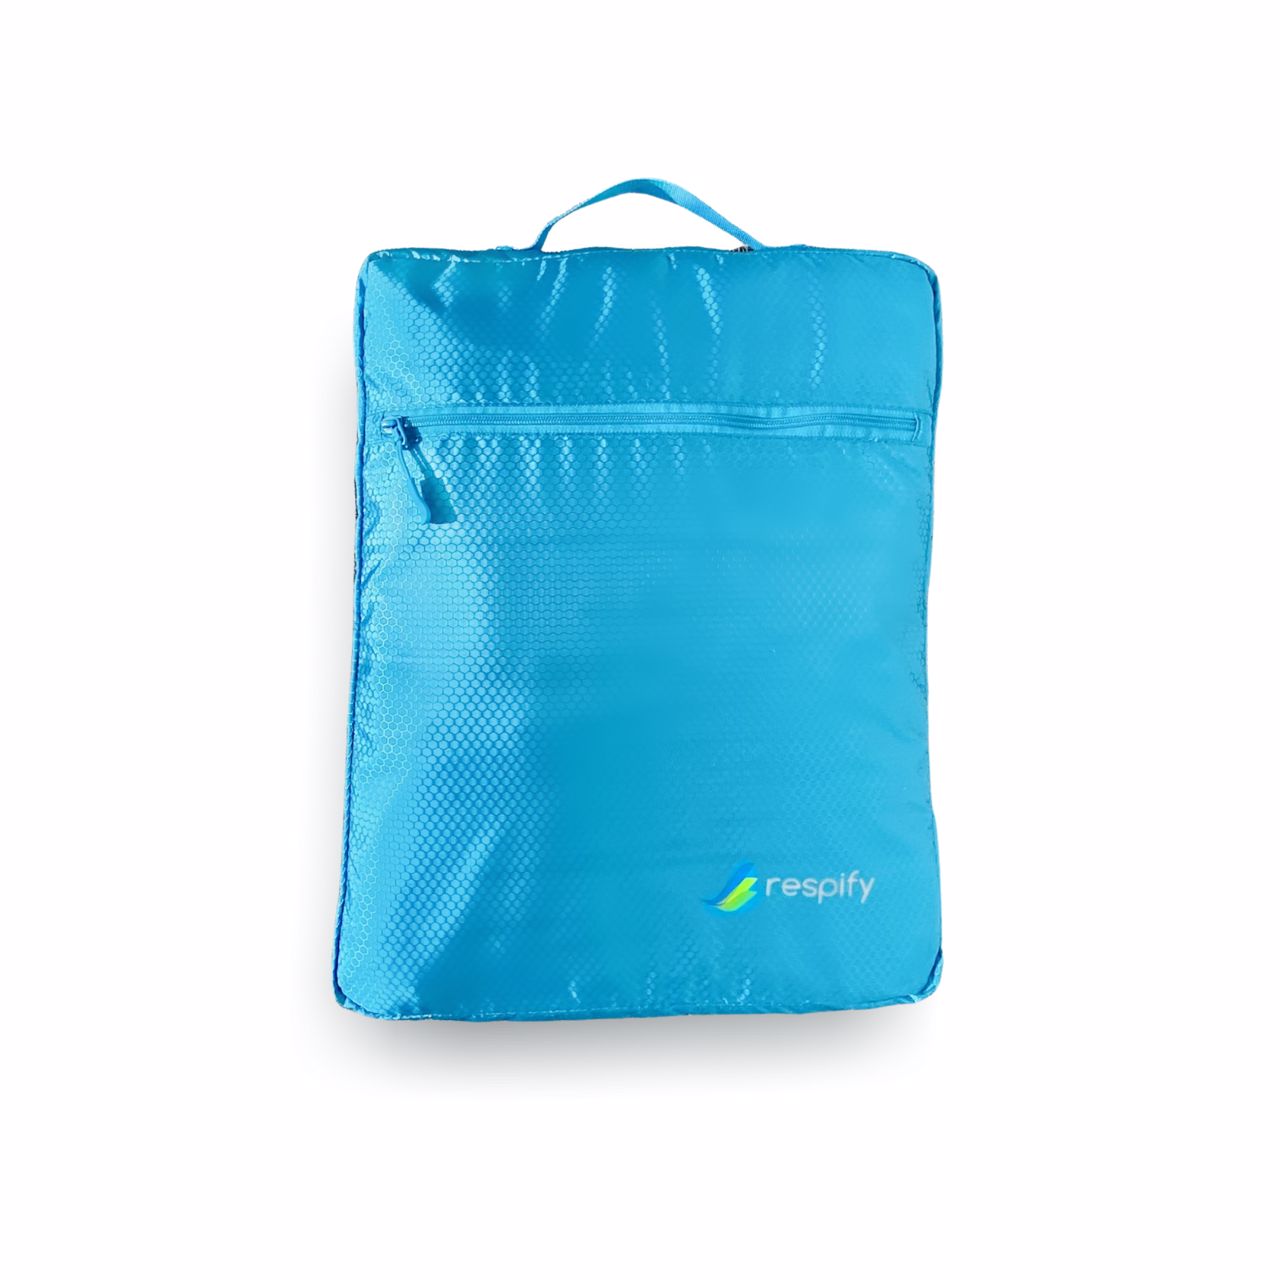 Respify™ Zip-It Bag Respify LIGHT BLUE 